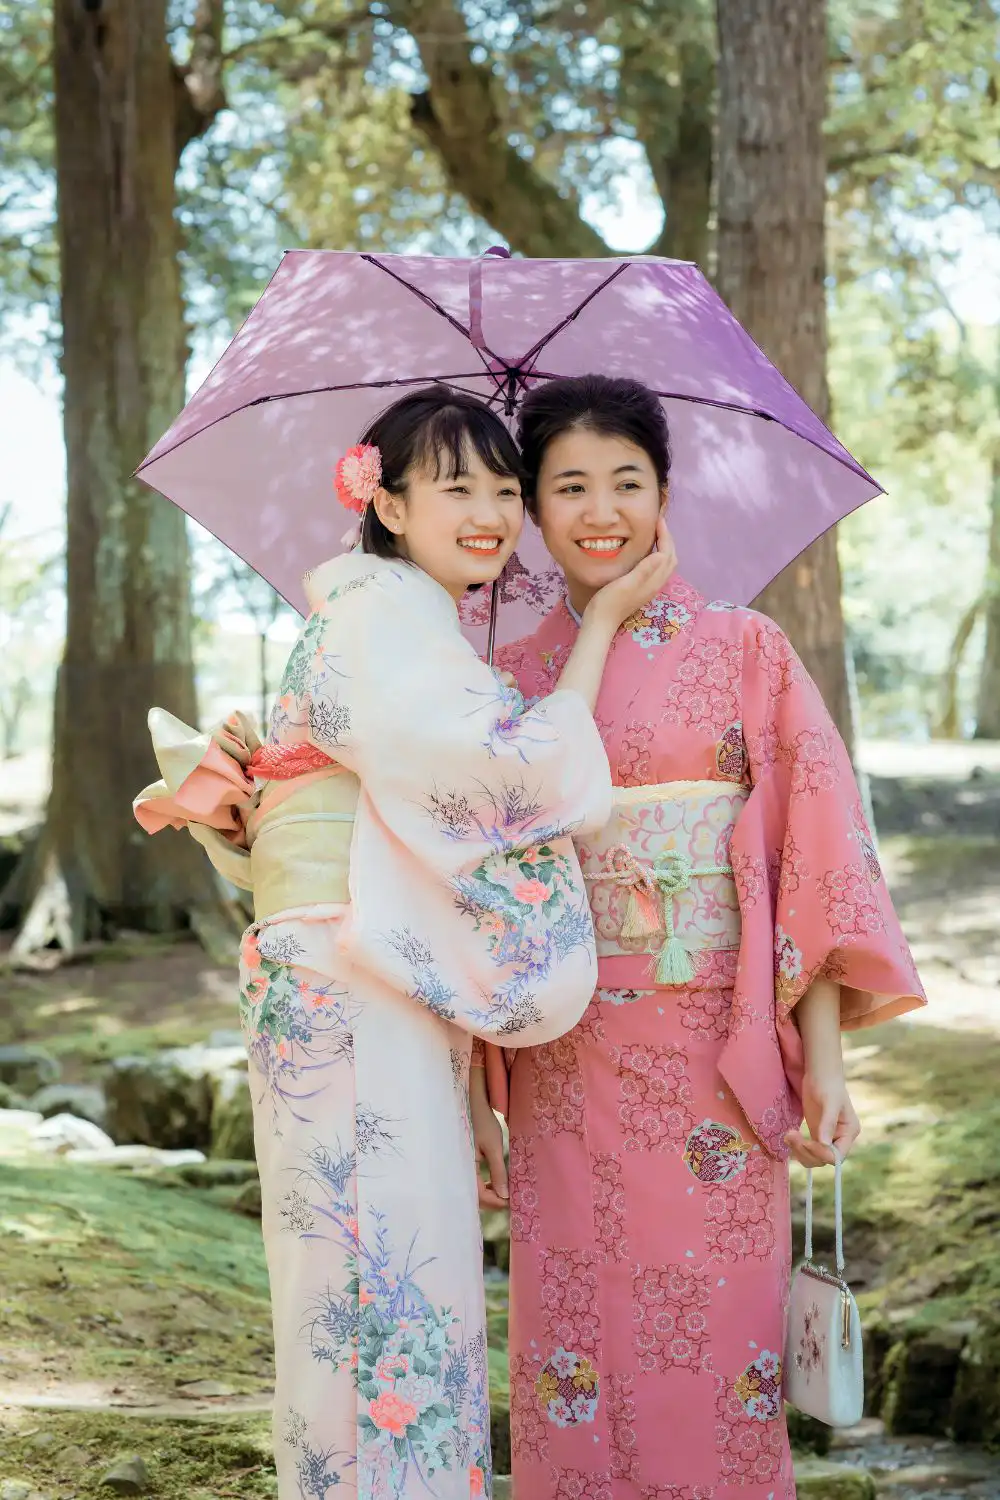 Women Wearing Kimonos